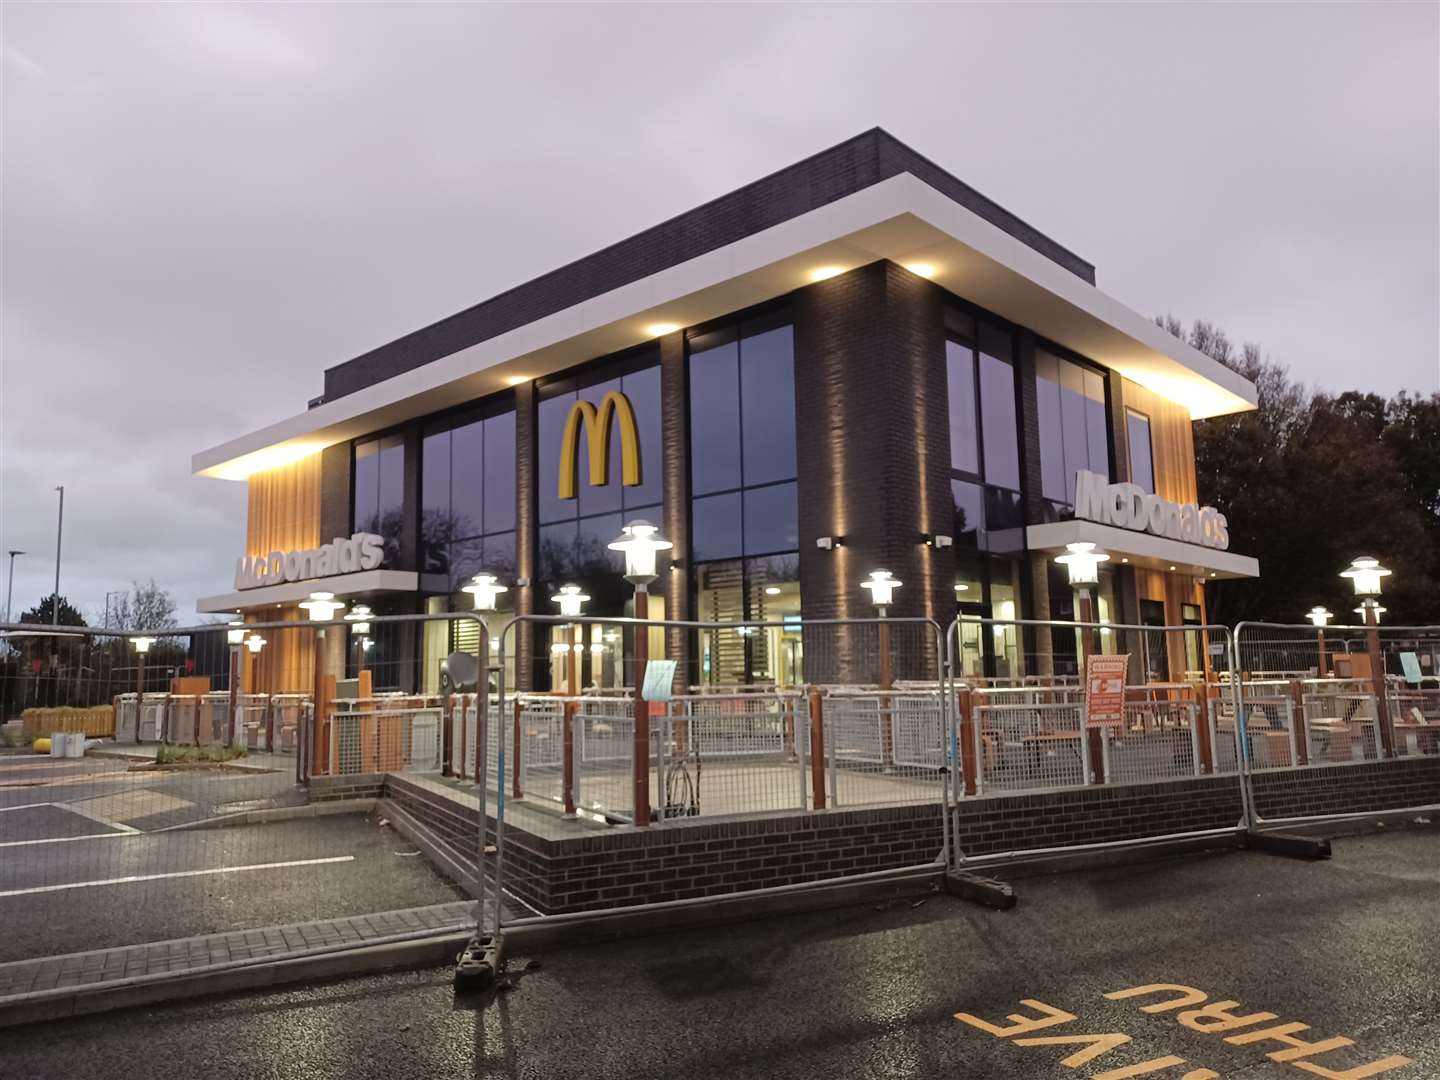 The new McDonald's in the Tesco car park in Cheriton, Folkestone, looks ready to open